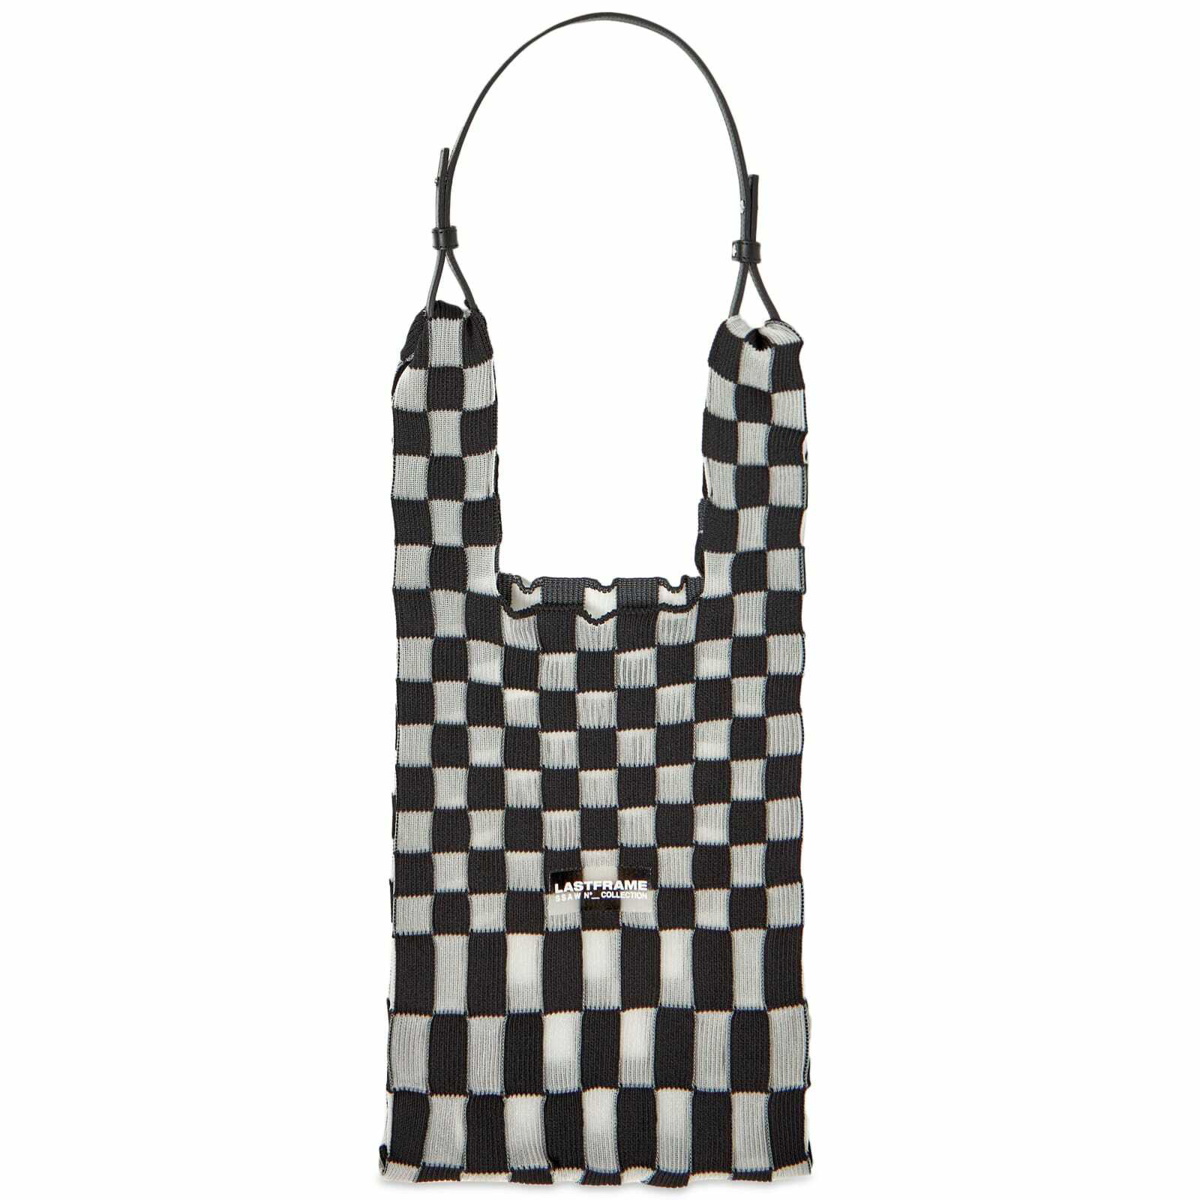 LASTFRAME Women's Sheer Ichimatsu Market Bag Medium in Black/Clear